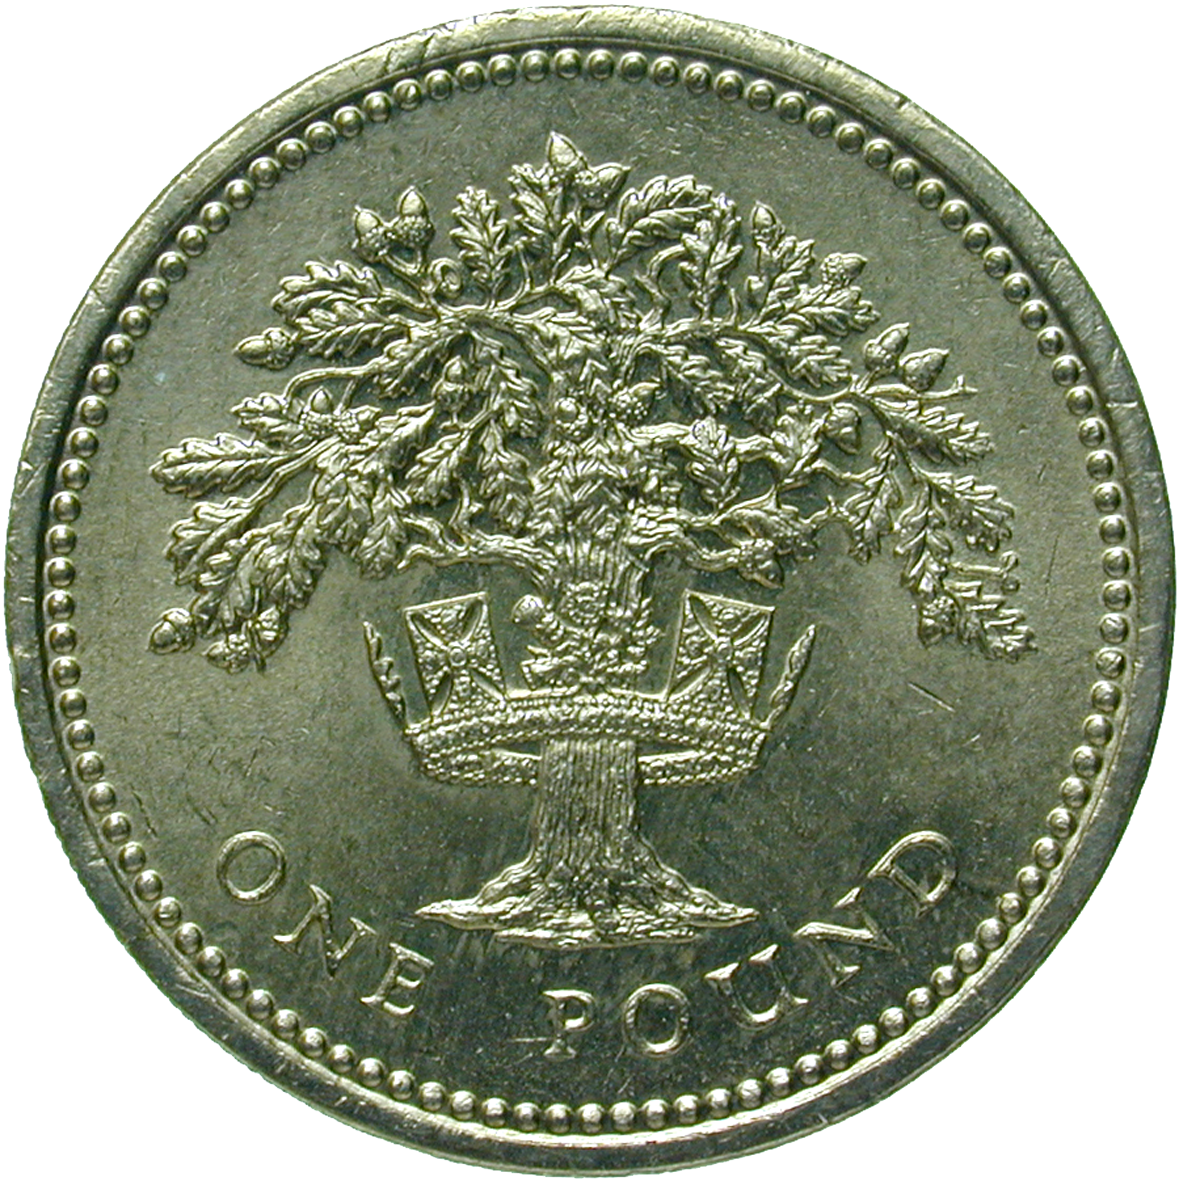 United Kingdom of Great Britain, Elizabeth II, 1 Pound 1992 (reverse)